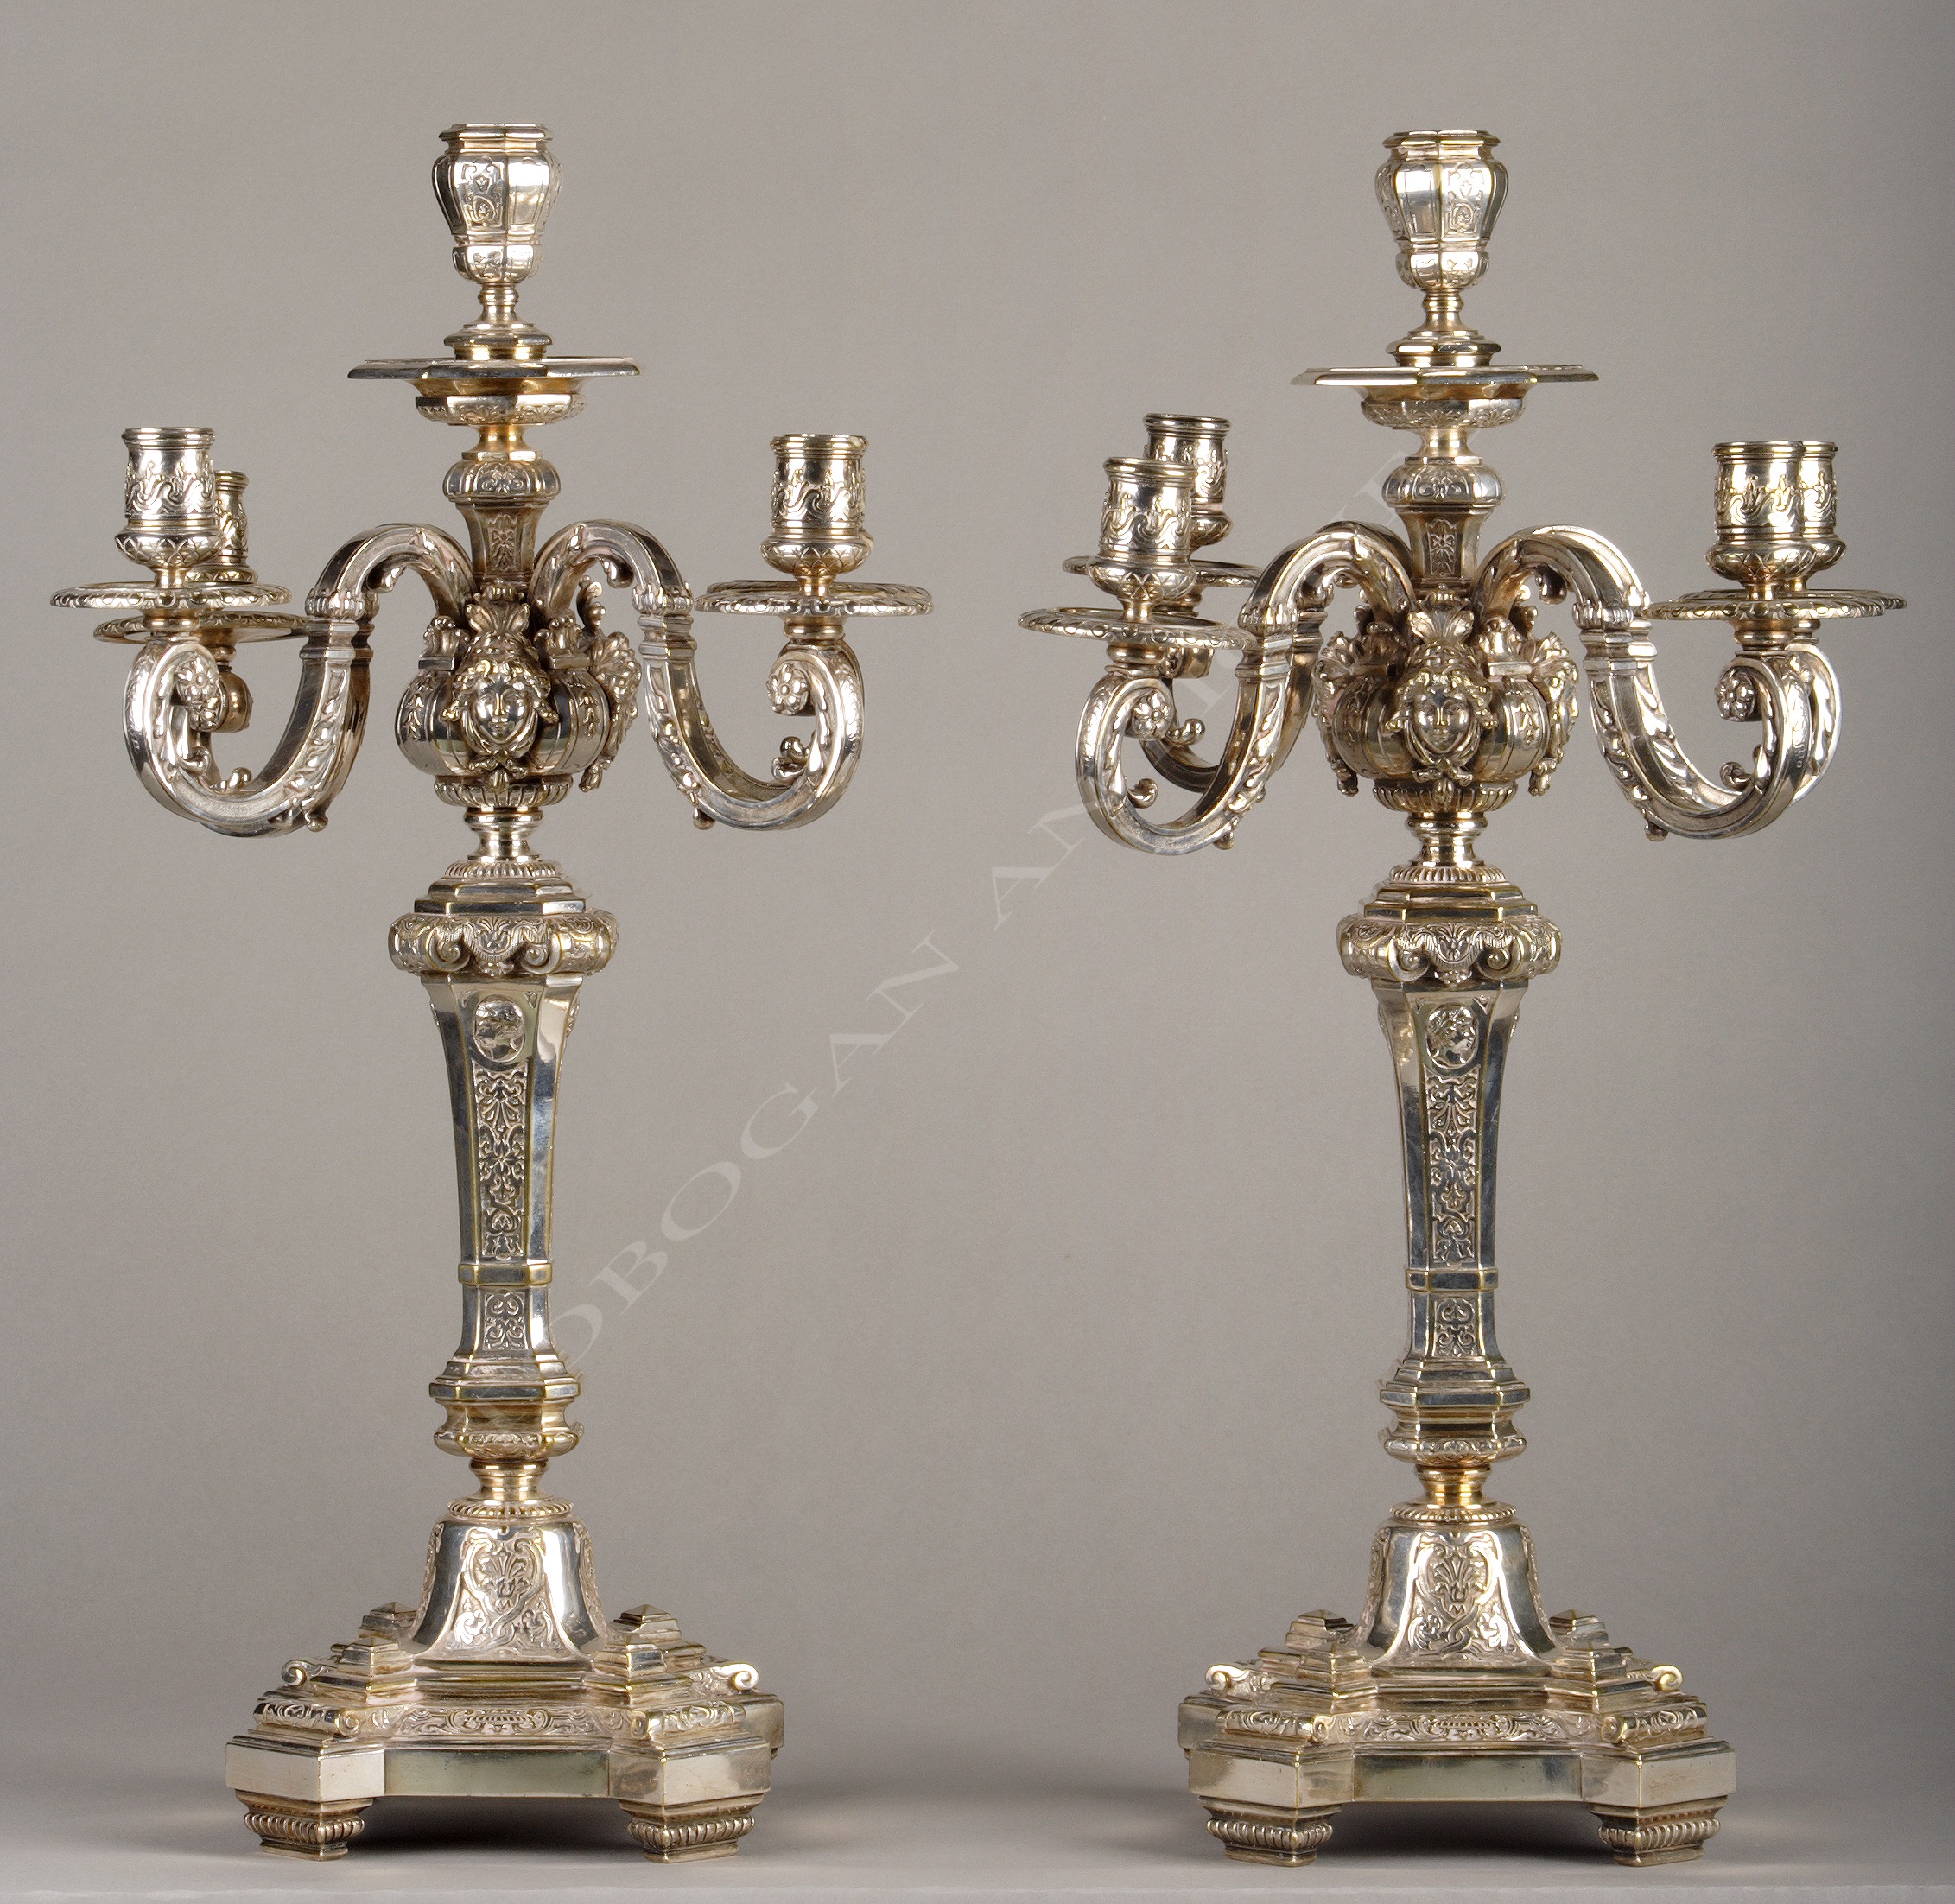 Pair of candelabras with feminine masks